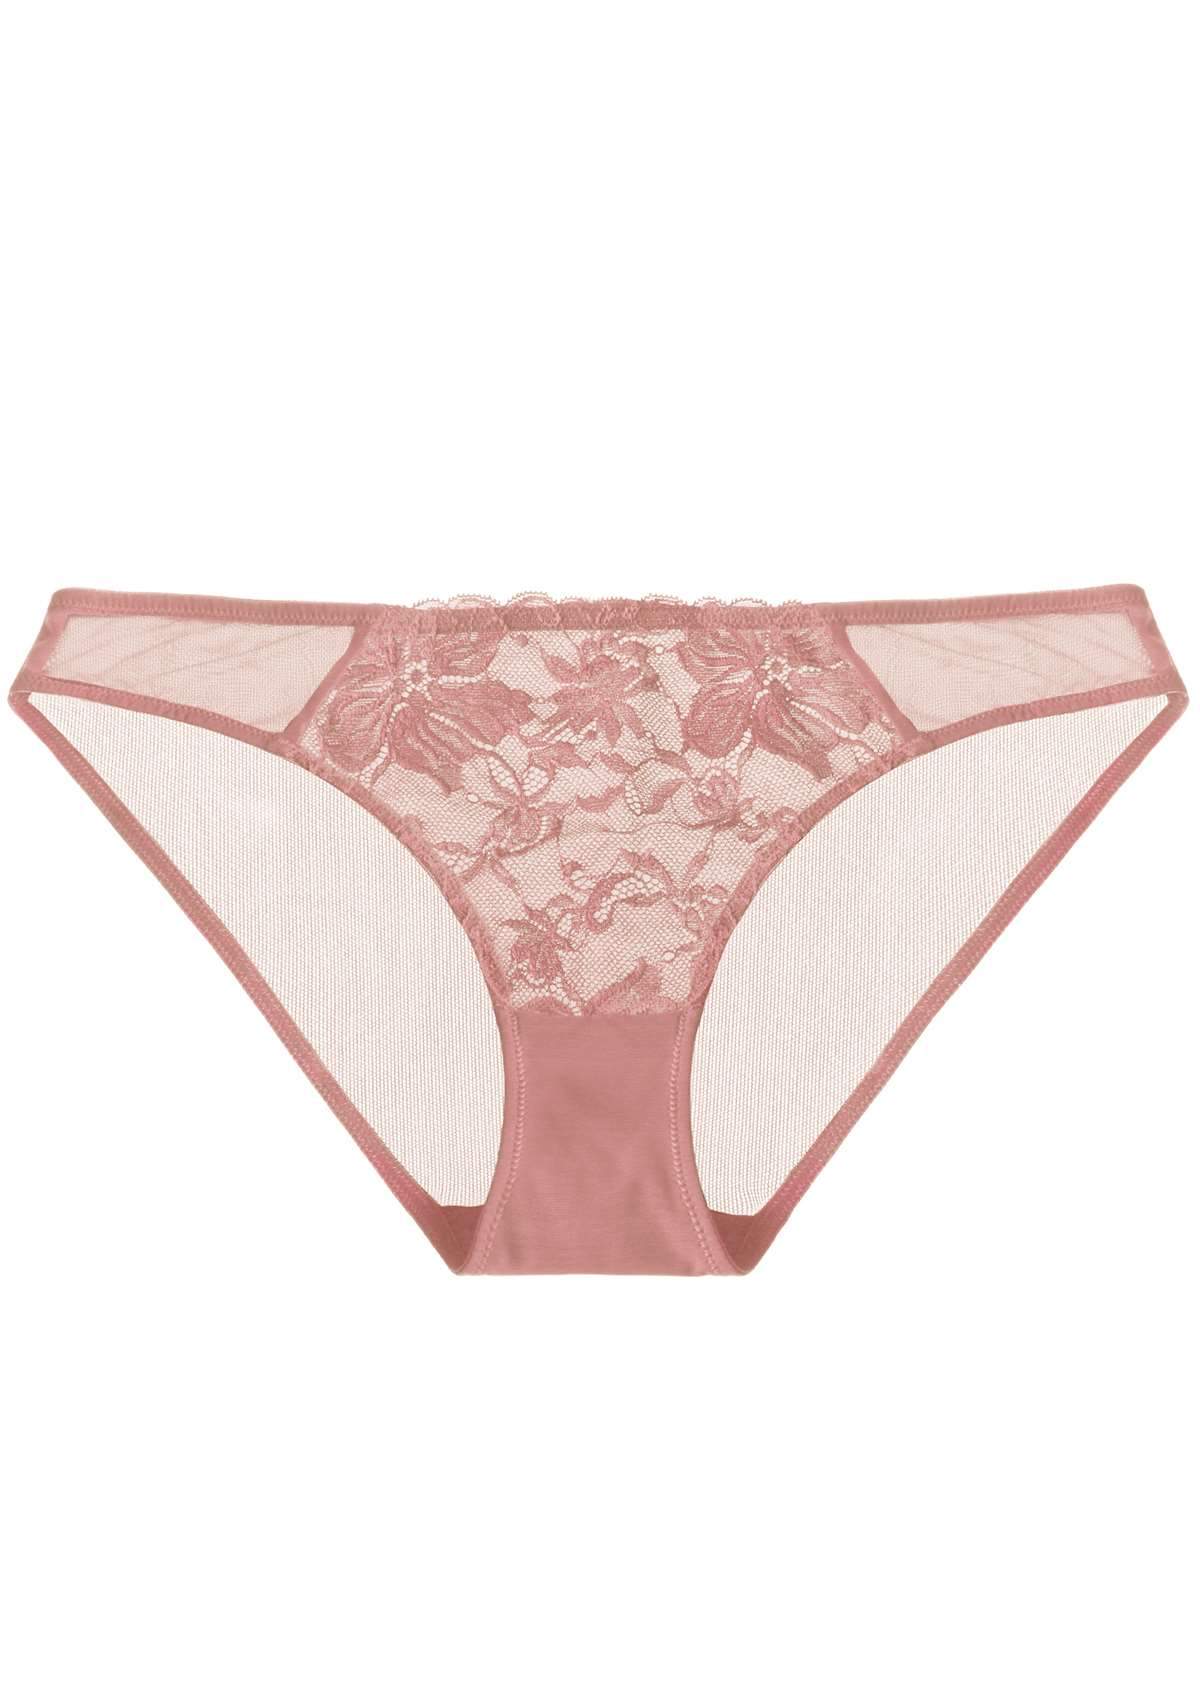 HSIA Pretty In Petals Sexy Everyday Lace Underwear  - M / Light Coral